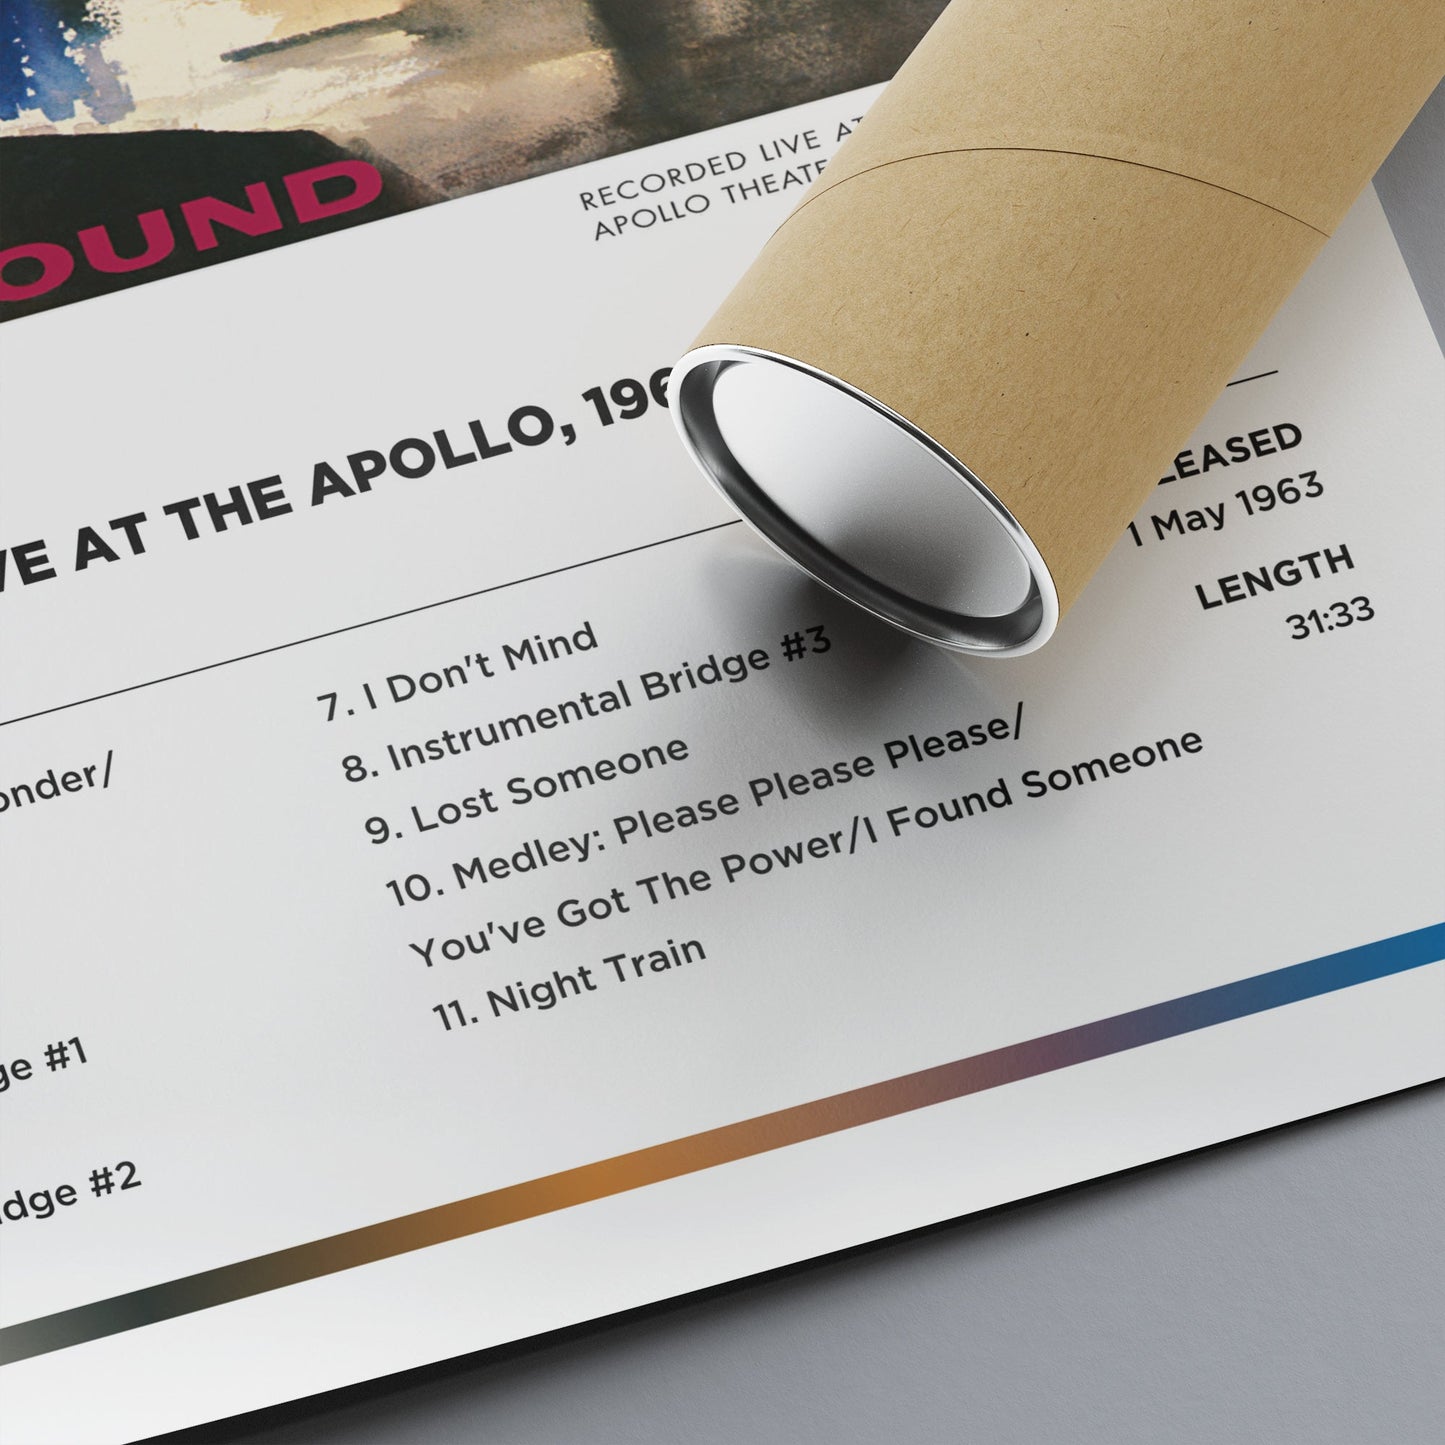 James Brown - Live At The Apollo Framed Poster Print | Polaroid Style | Album Cover Artwork